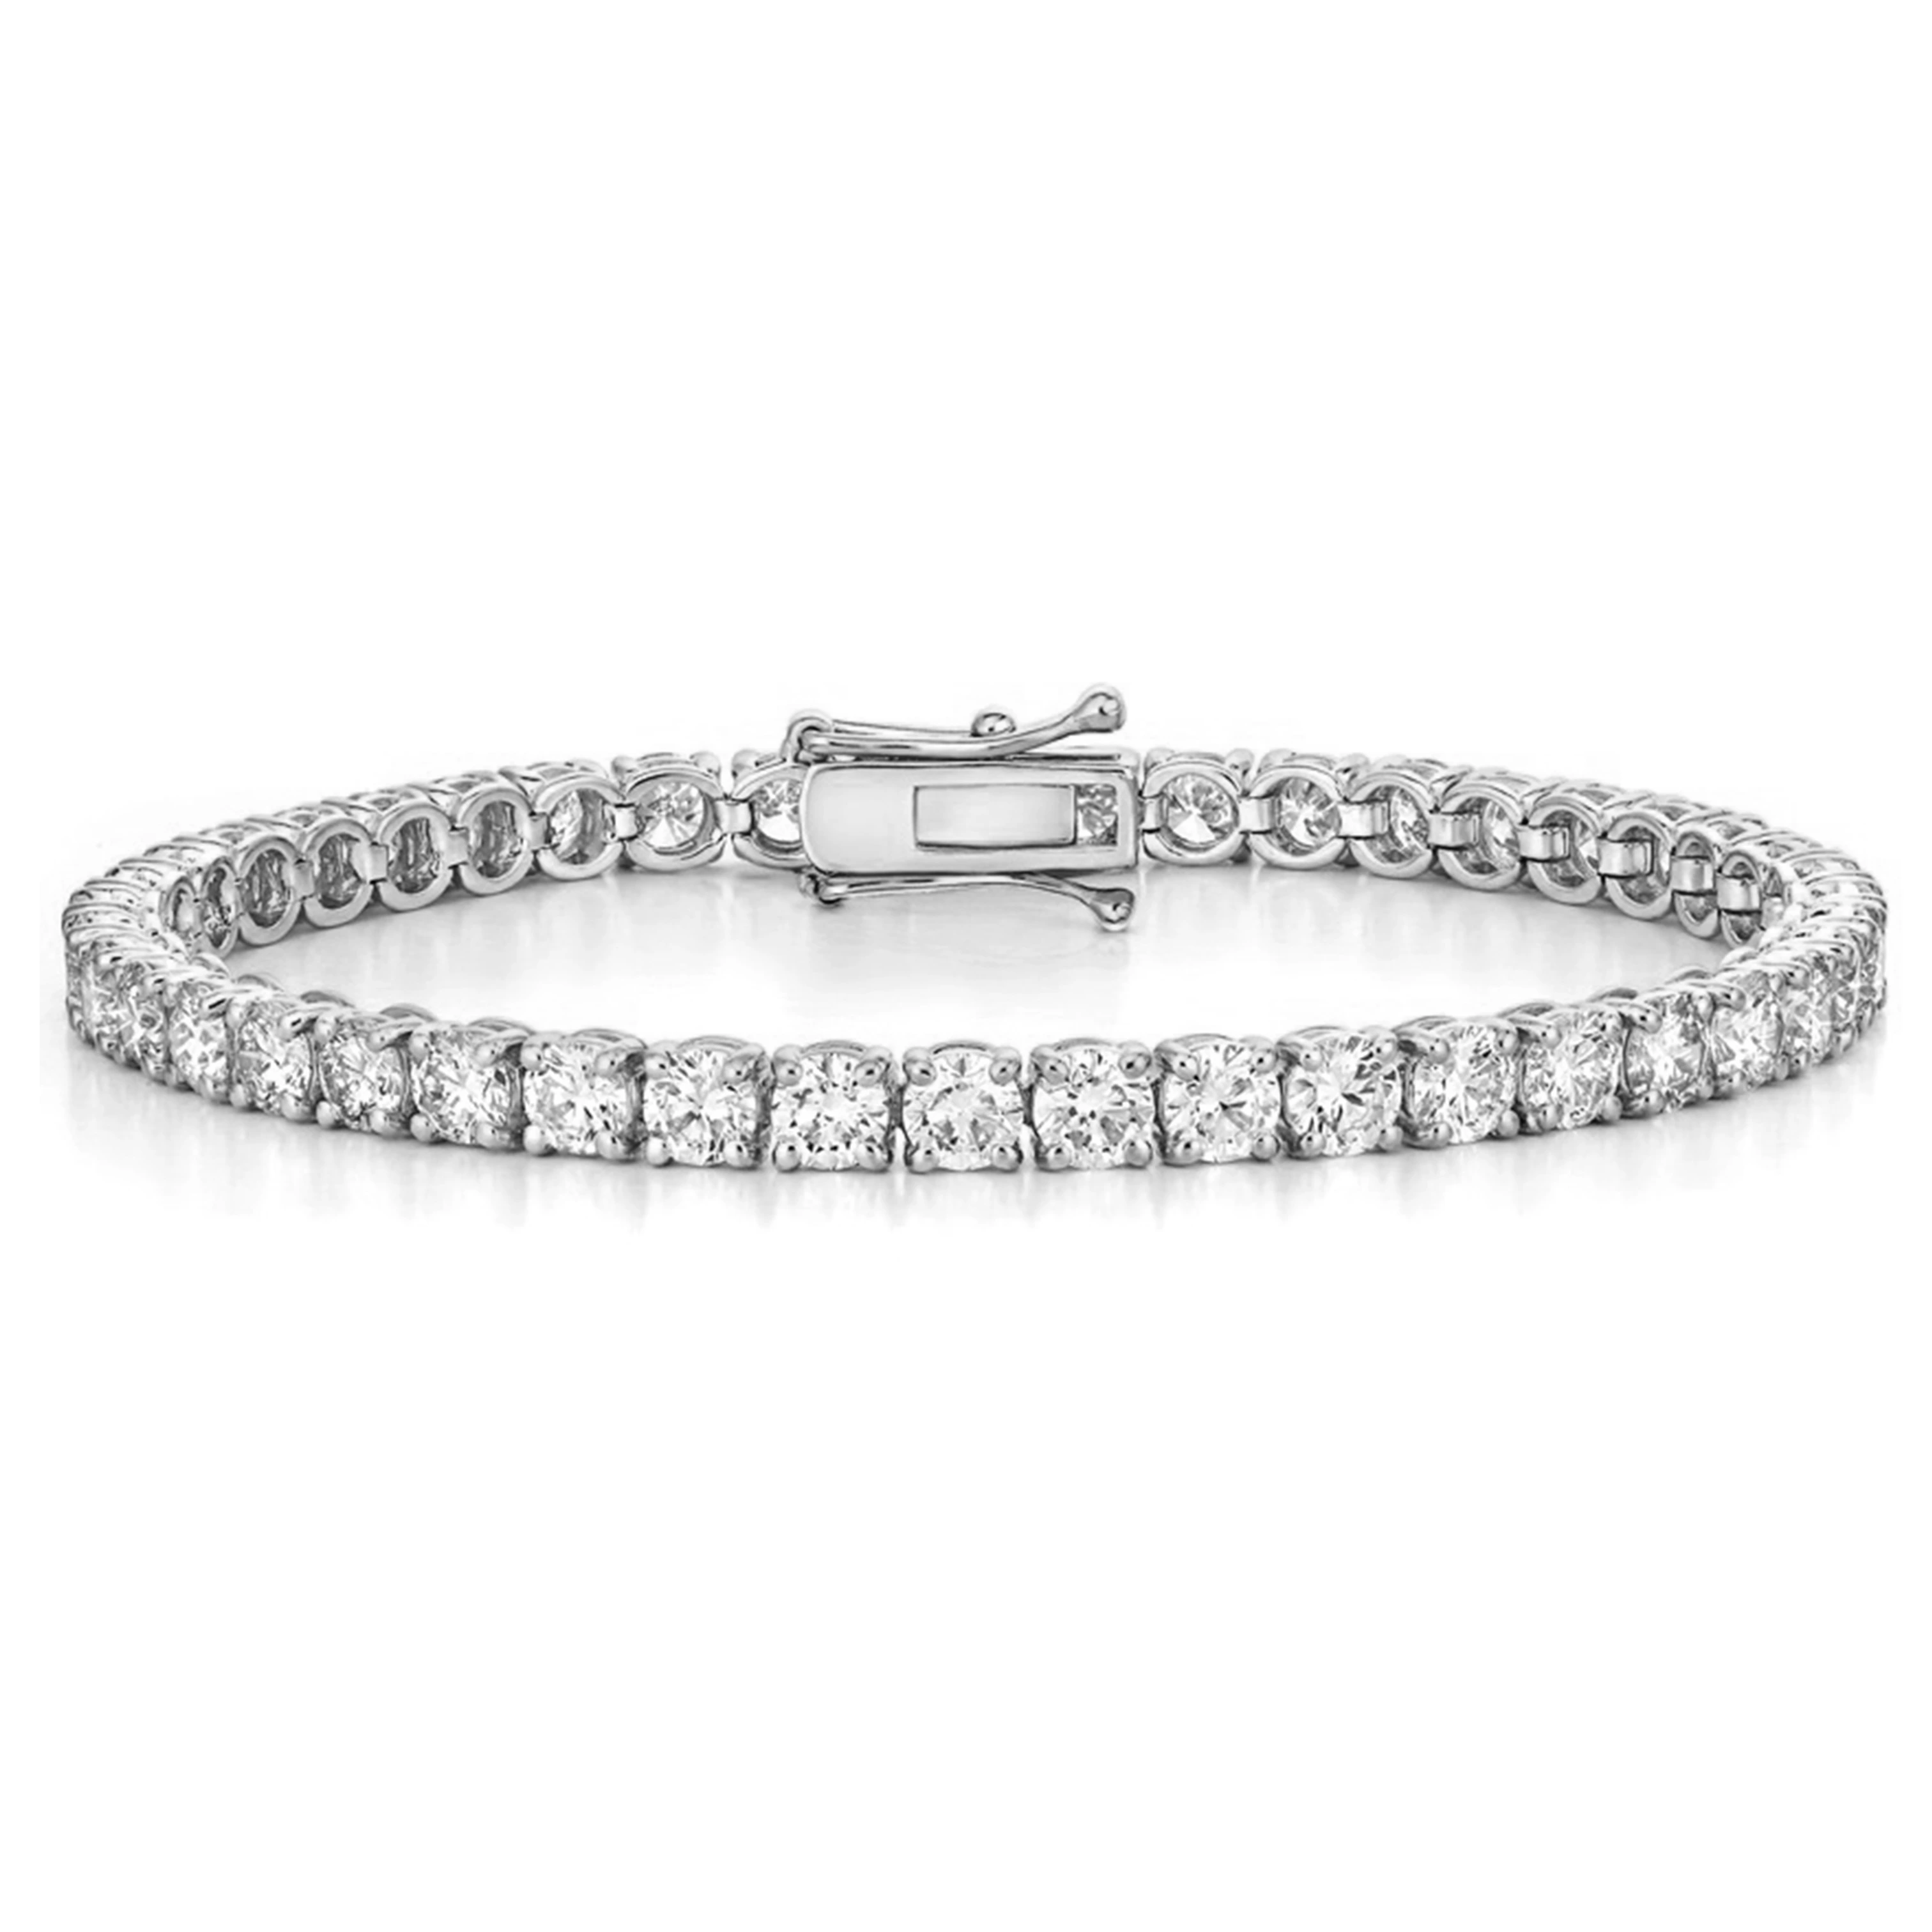 12.22 carat Lab Grown Diamond Tennis Bracelet